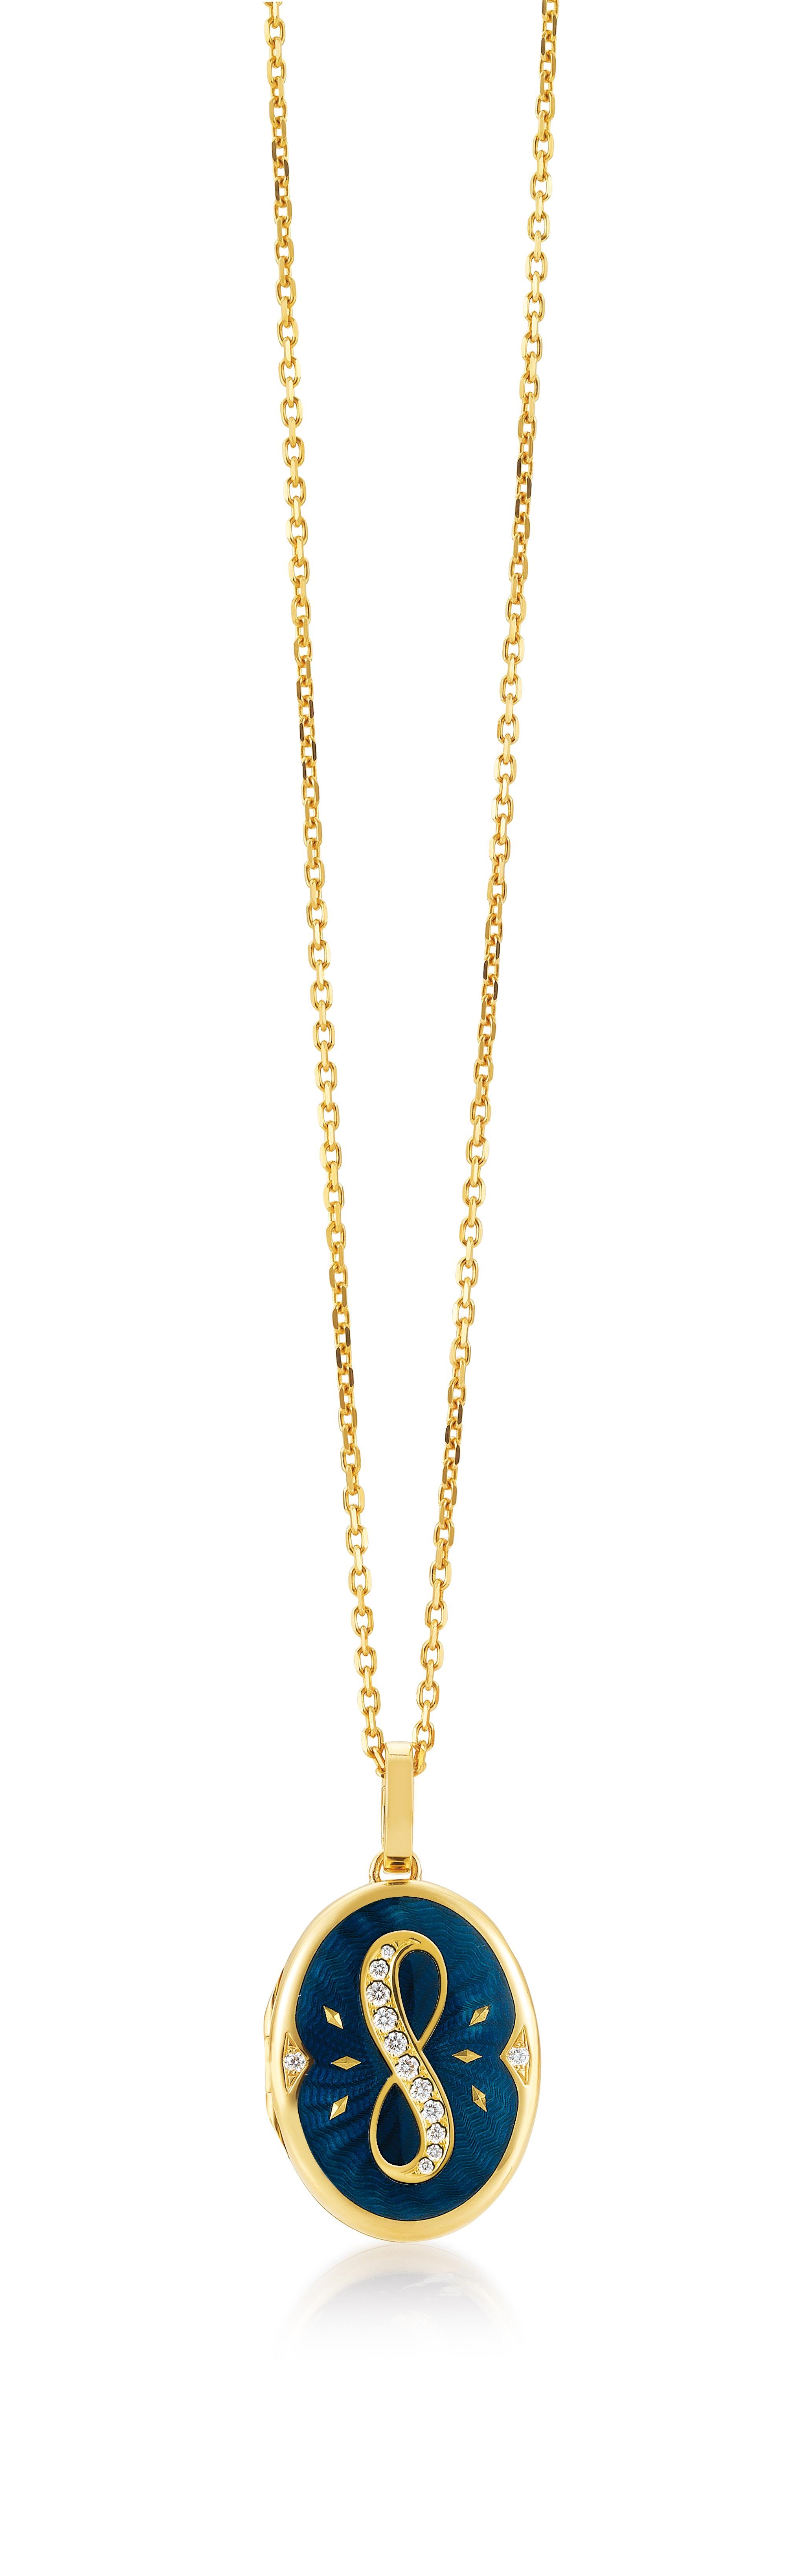 Oval Locket Pendant Necklace 18k Yellow Gold Blue Enamel 12 Diamonds 0.08 ct GVS For Sale 1